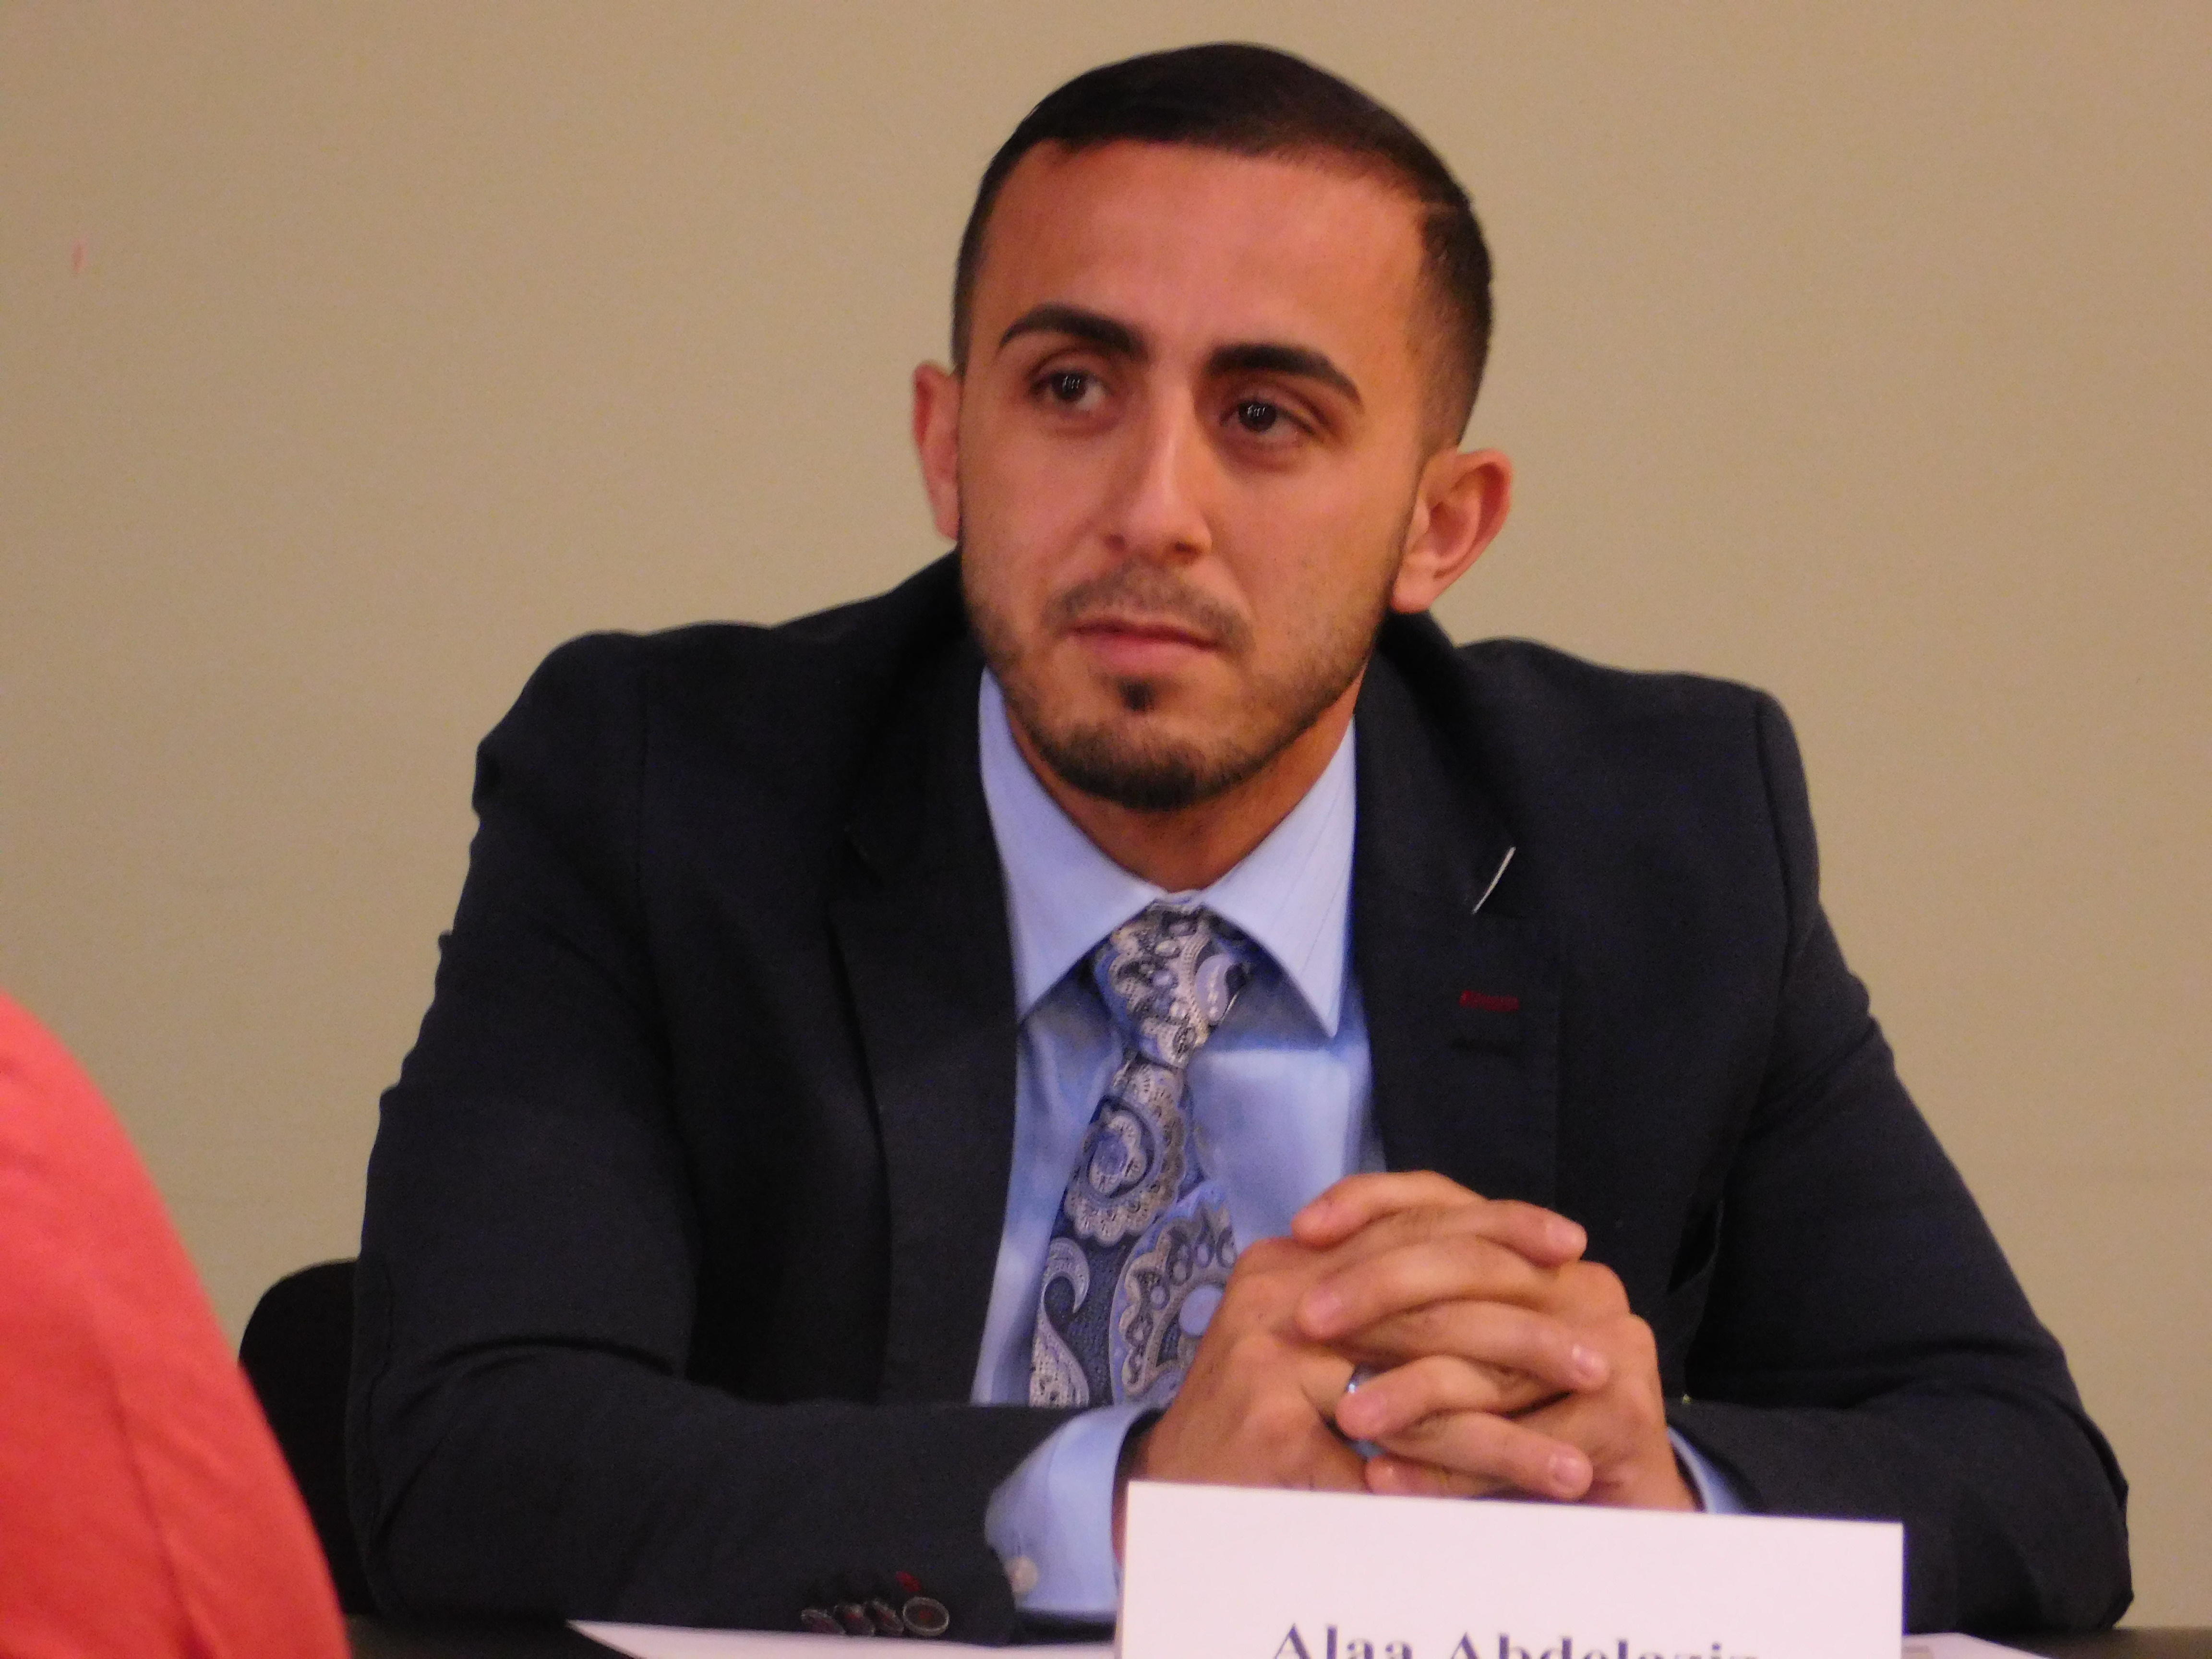 Abdelaziz is running to represent Ward 6. 